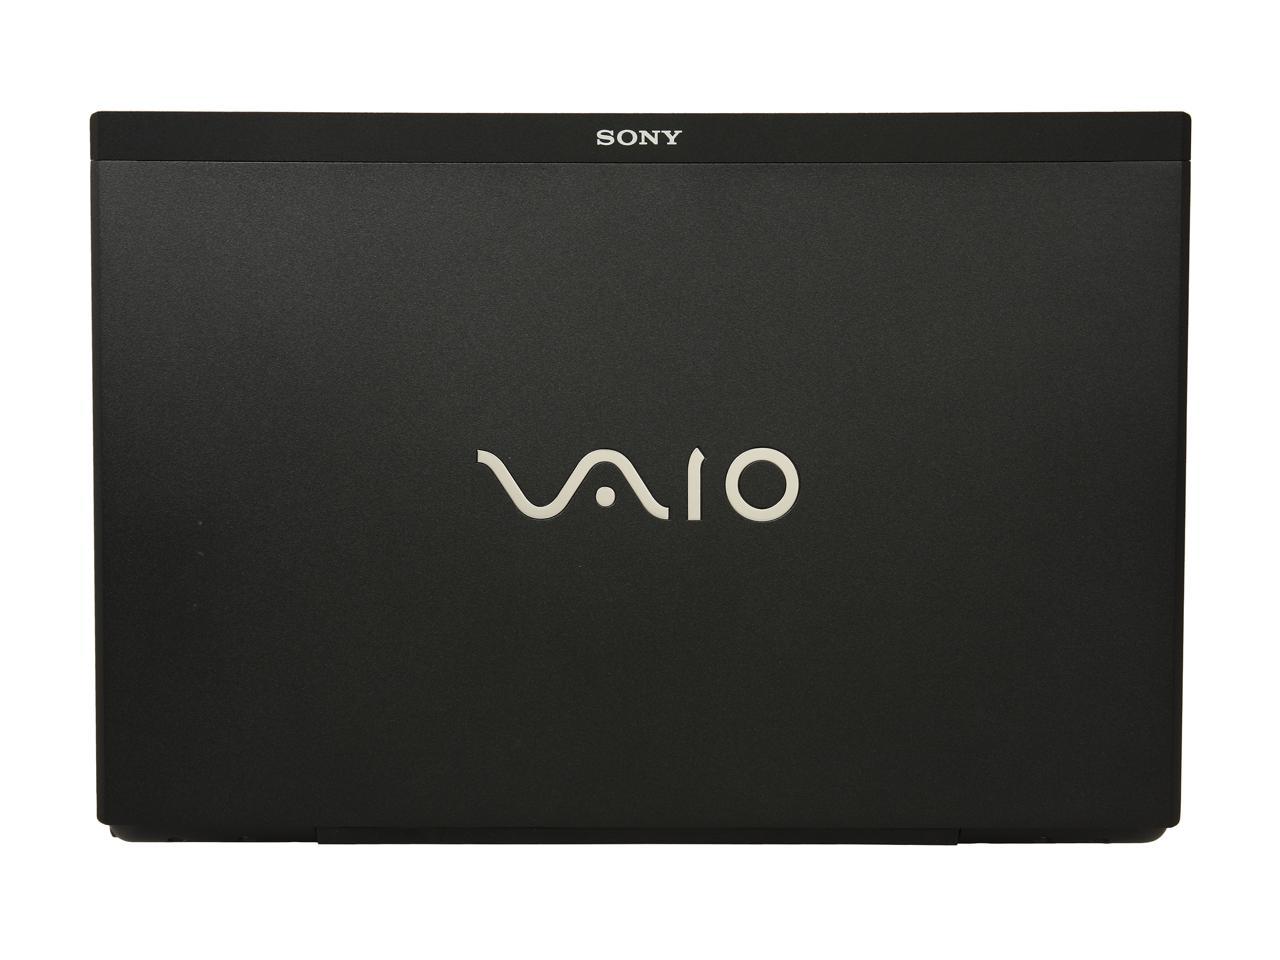 SONY Laptop VAIO SVS15116FXB Intel Core i7 3rd Gen 3612QM (2.10GHz) 8GB